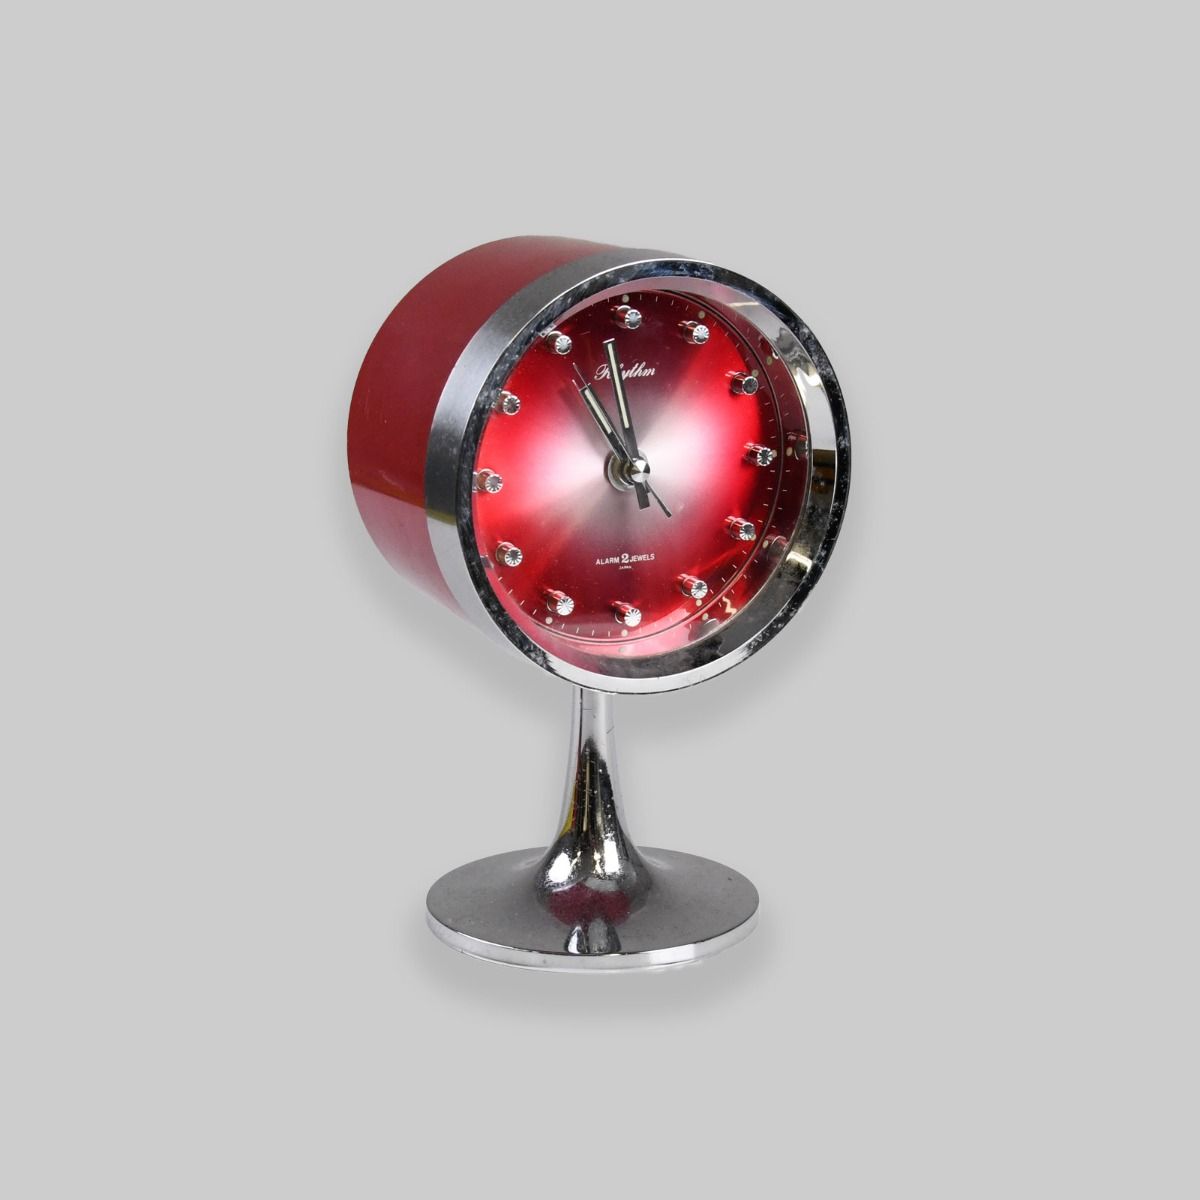 Vintage 1970s Rhythm Tulip Stem Alarm Clock